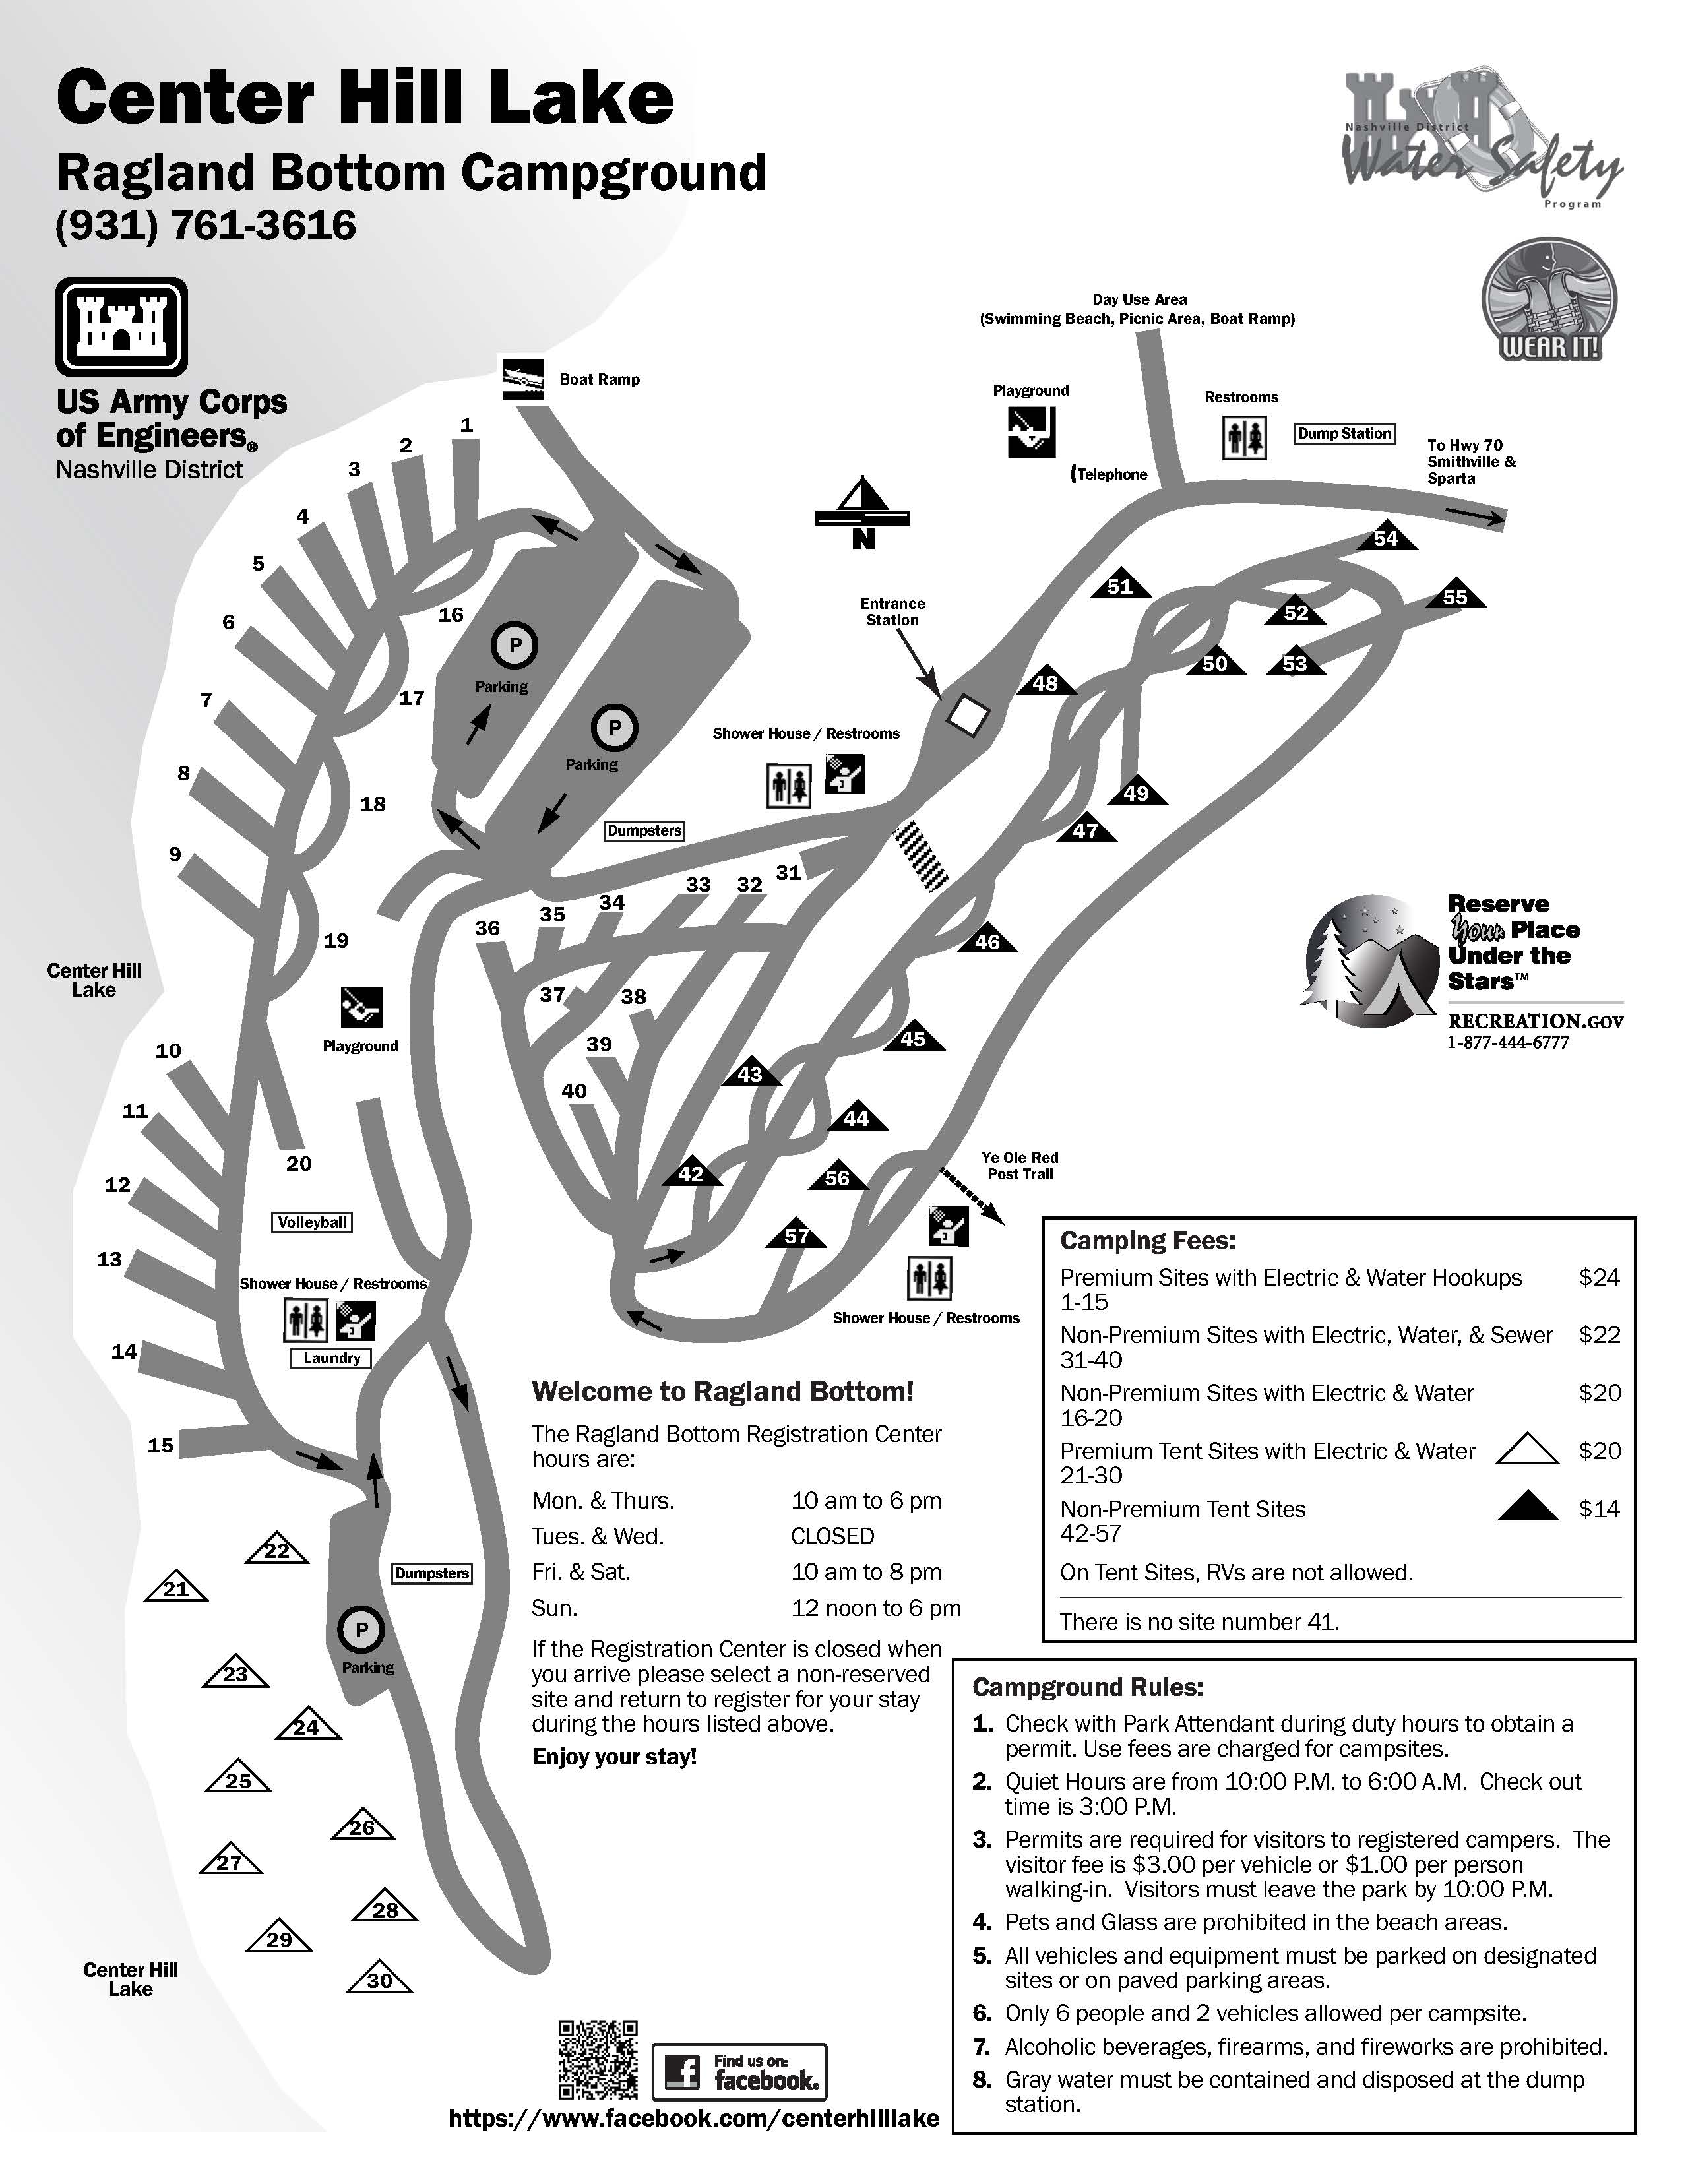 Center Hill Lake's Ragland Bottom Campground Map 